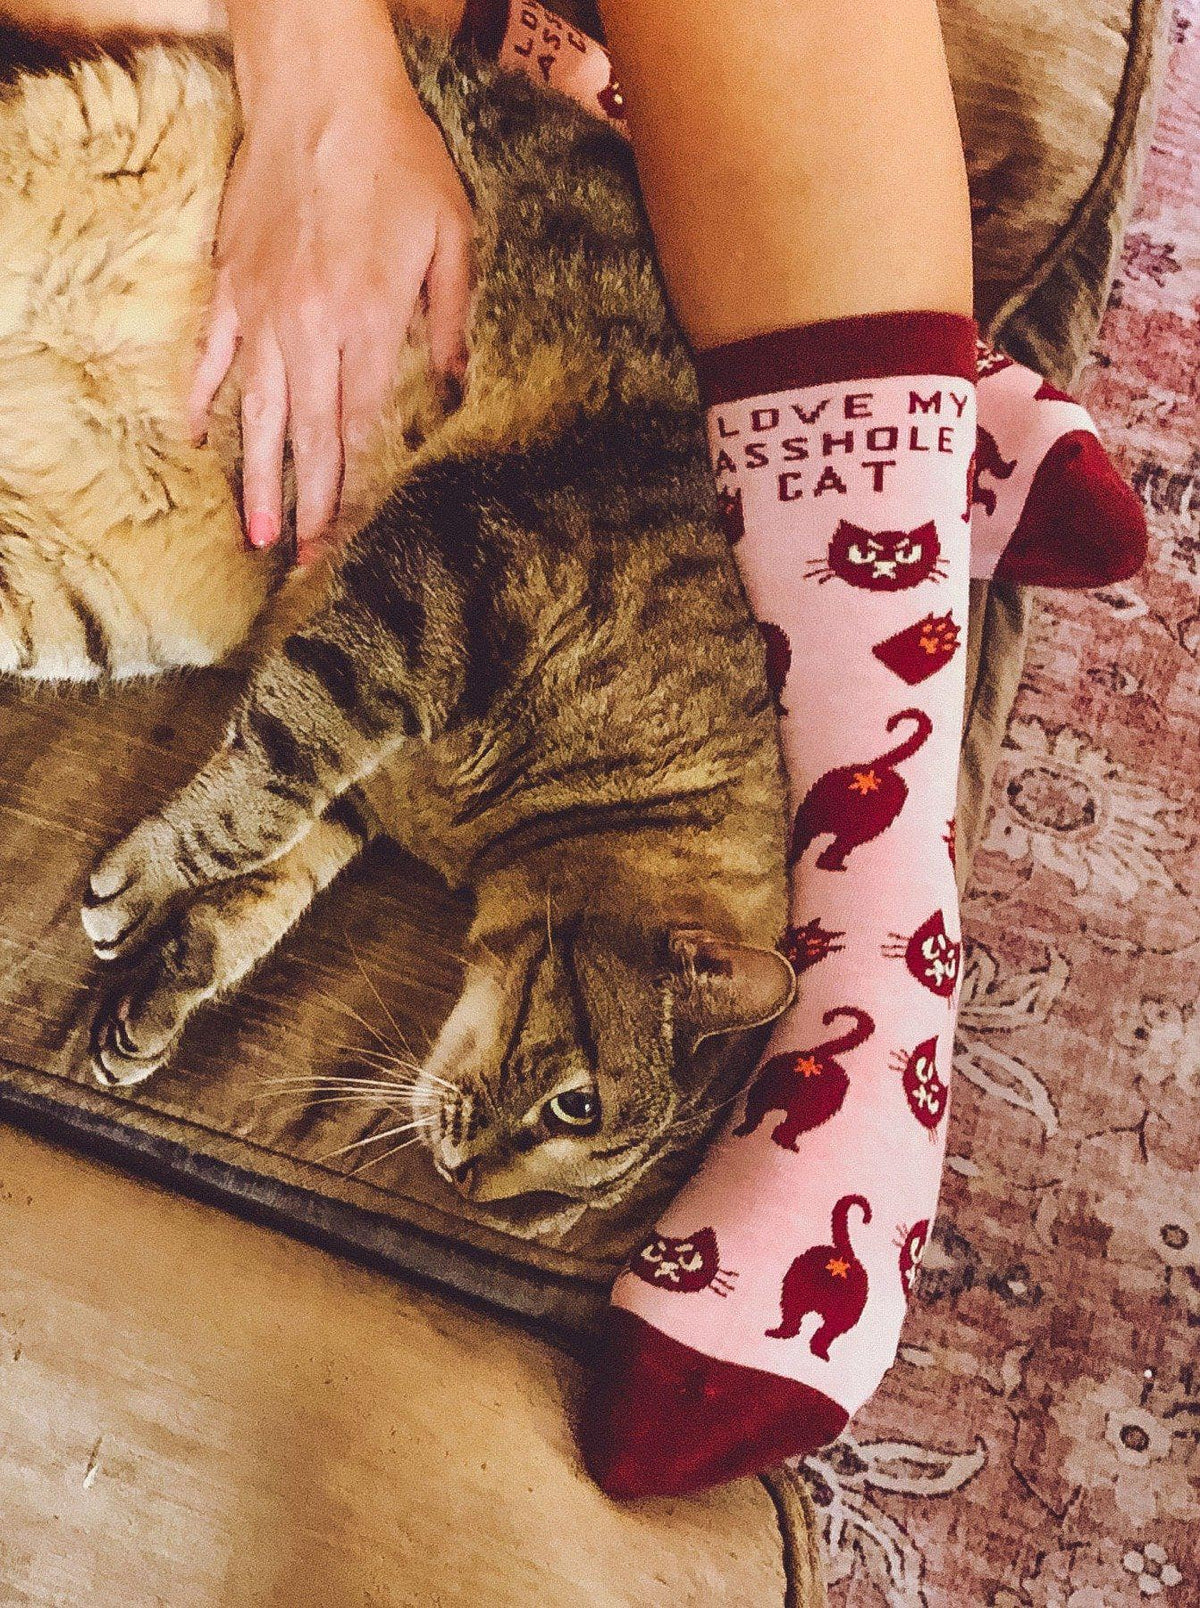 Women&#39;s I Love My Asshole Cat Socks - Crazy Dog T-Shirts